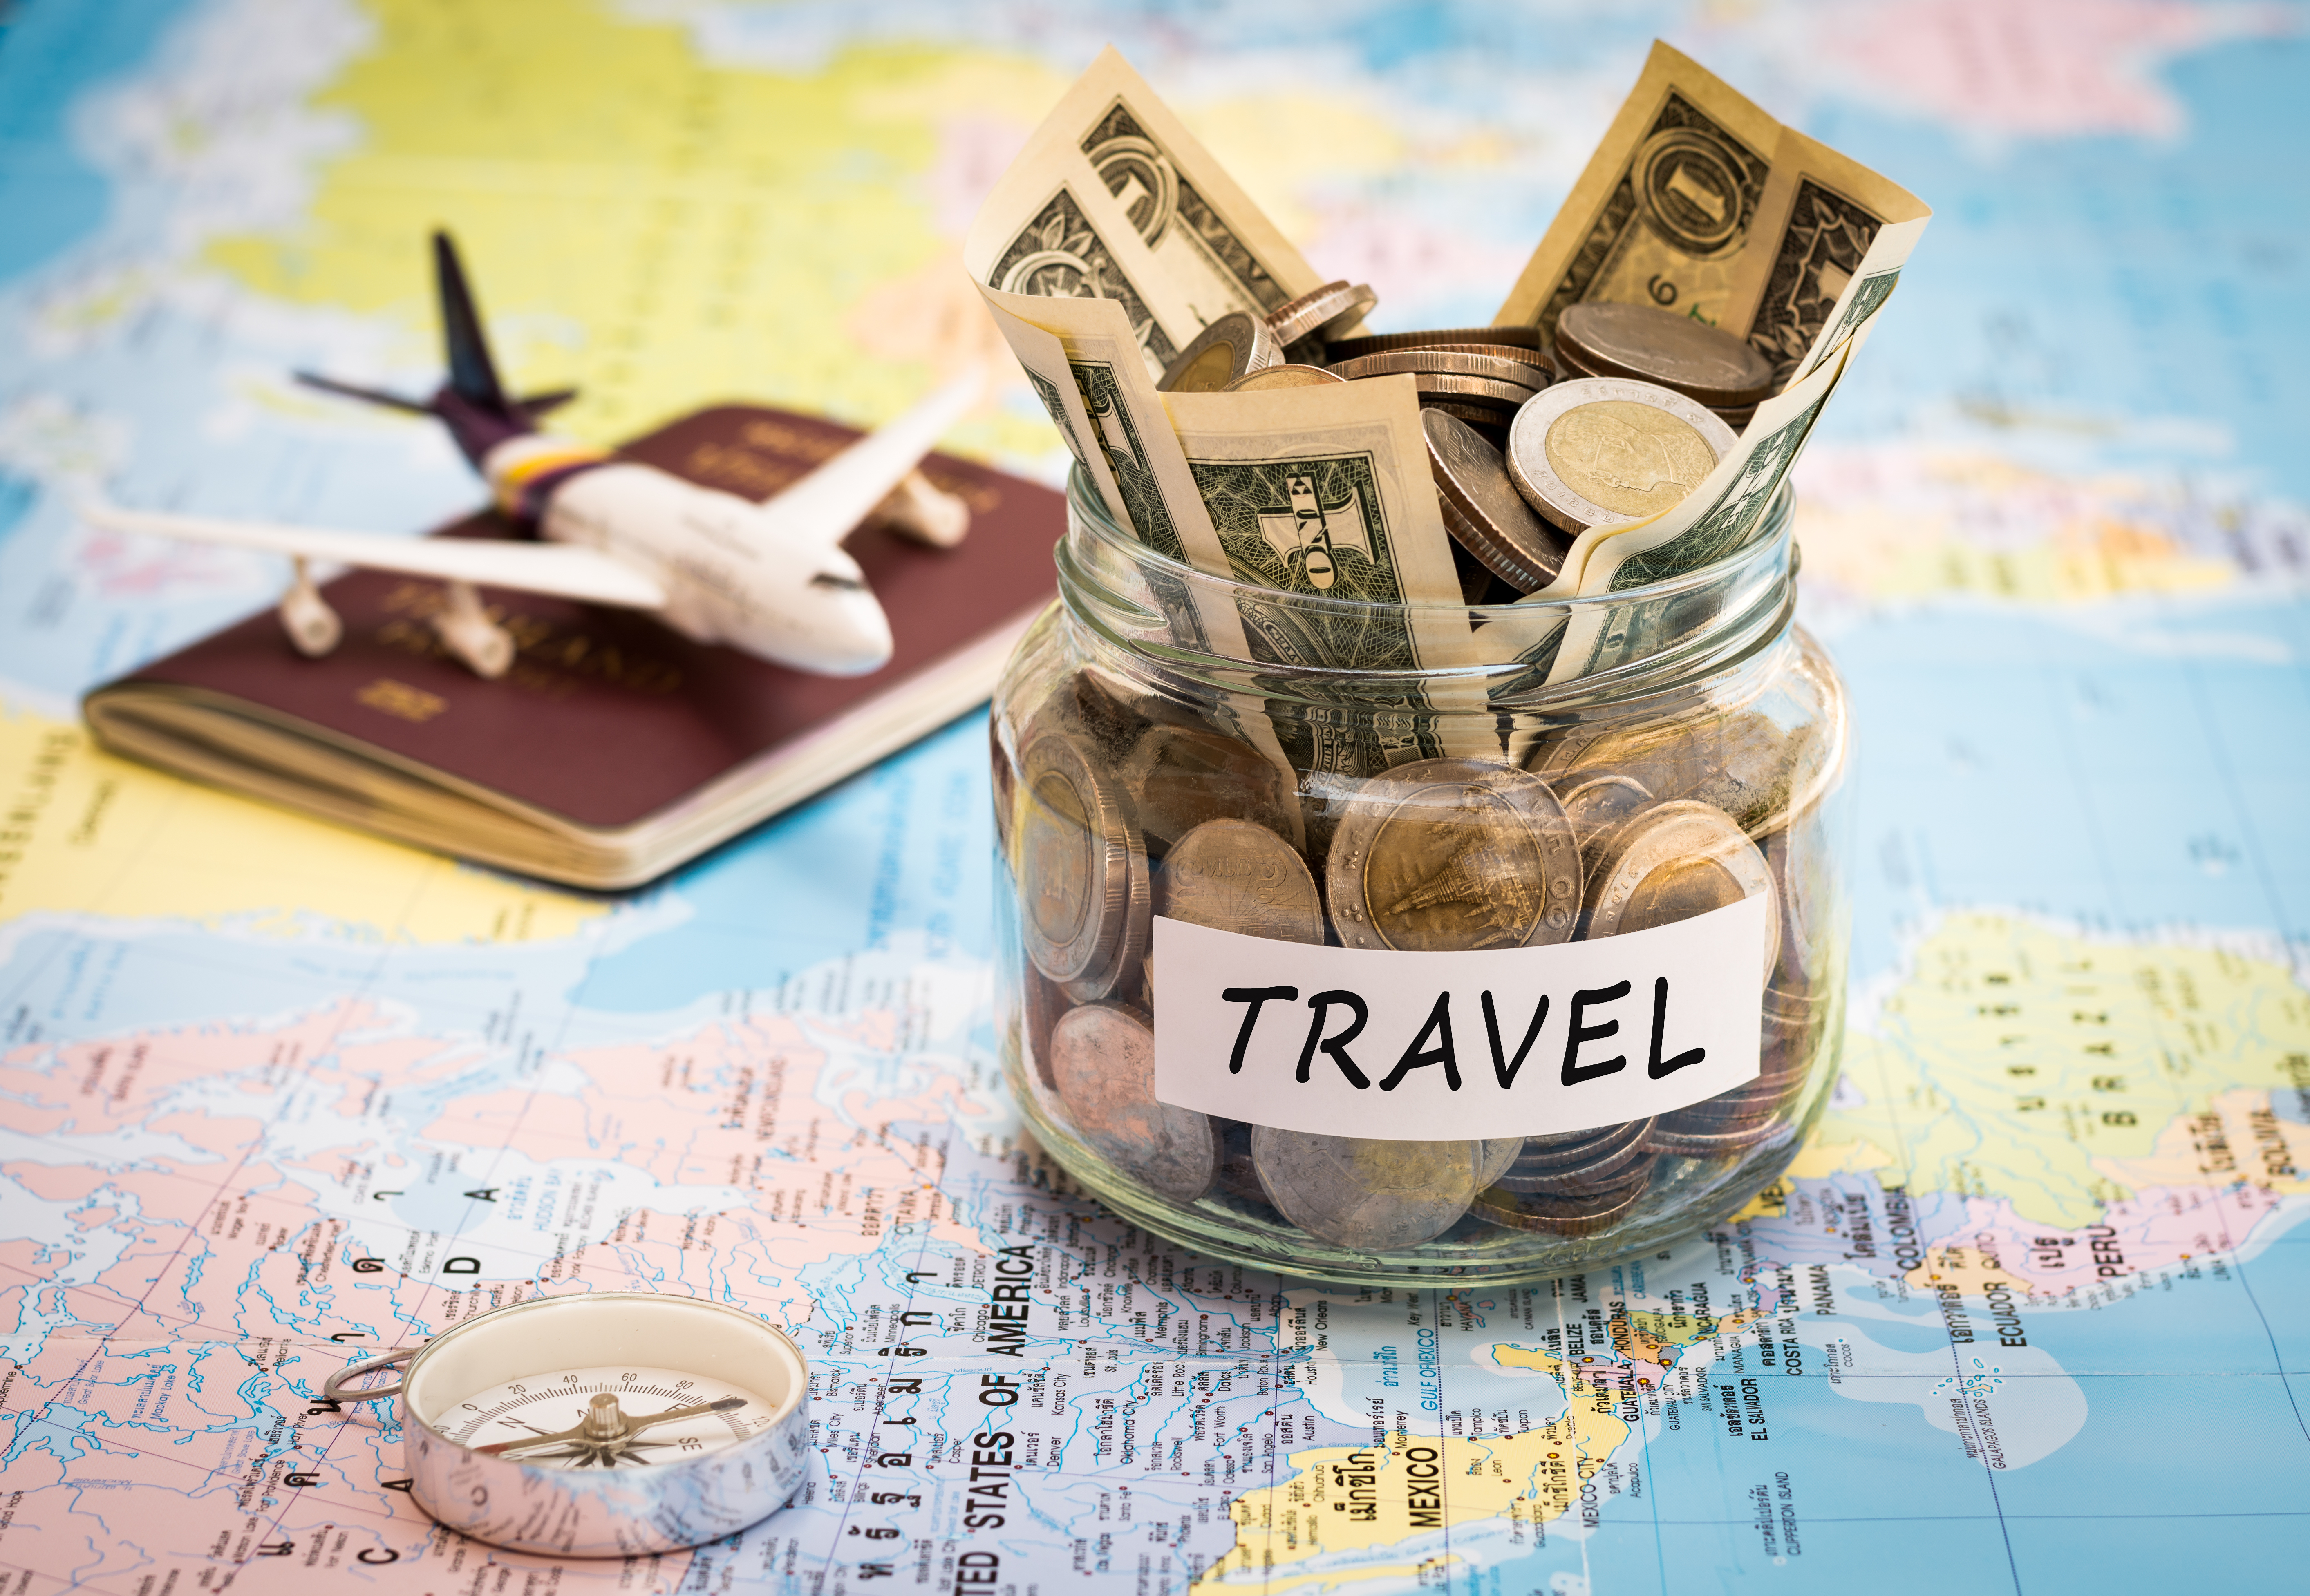 Savings for travel